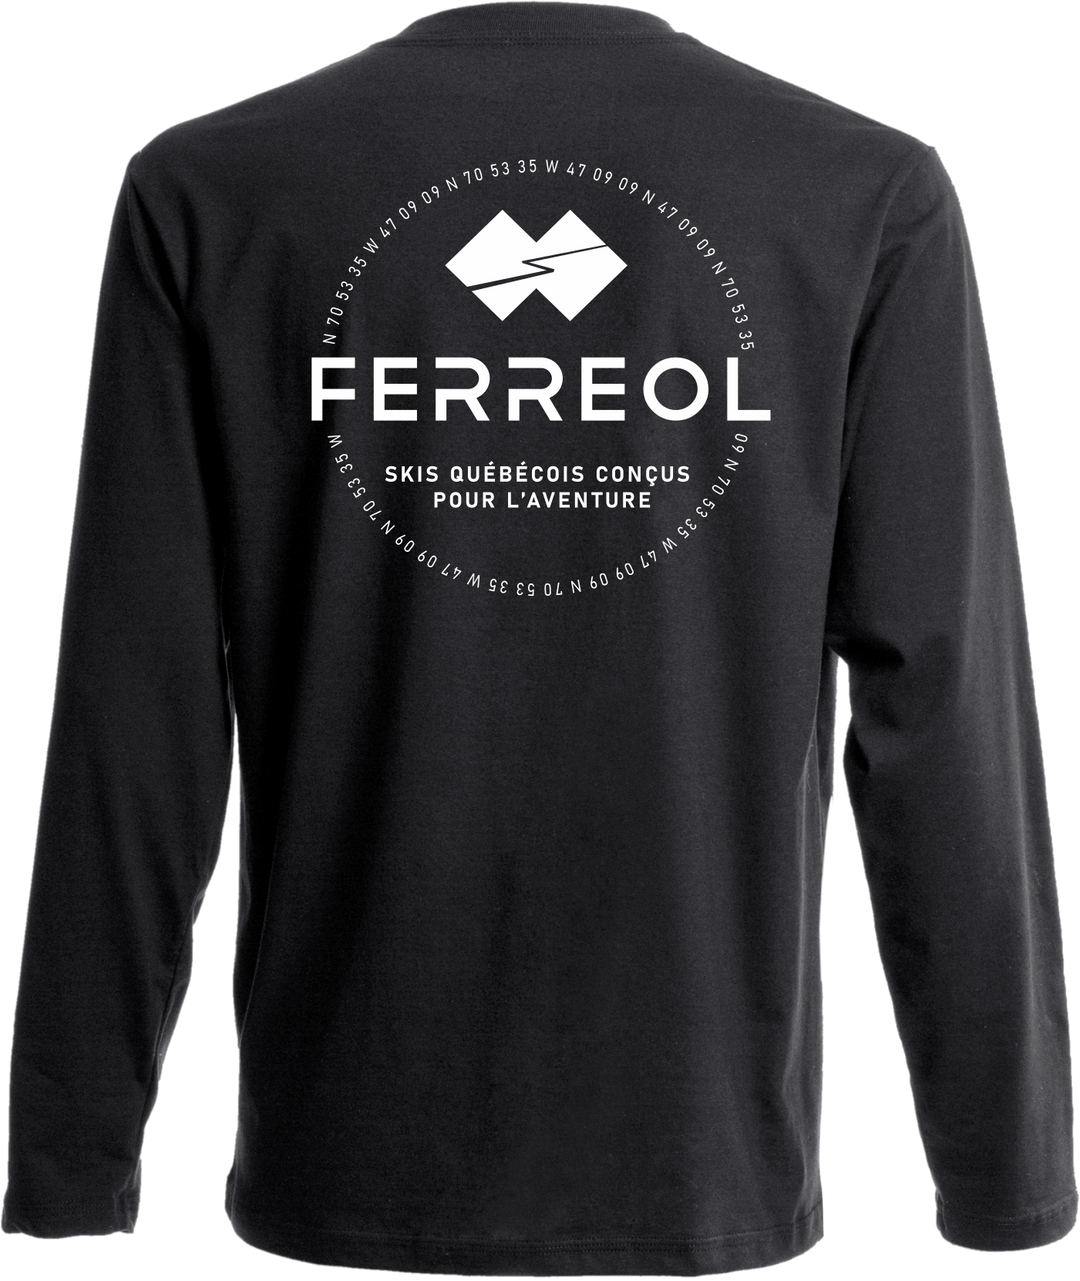 Ferreol black sweater